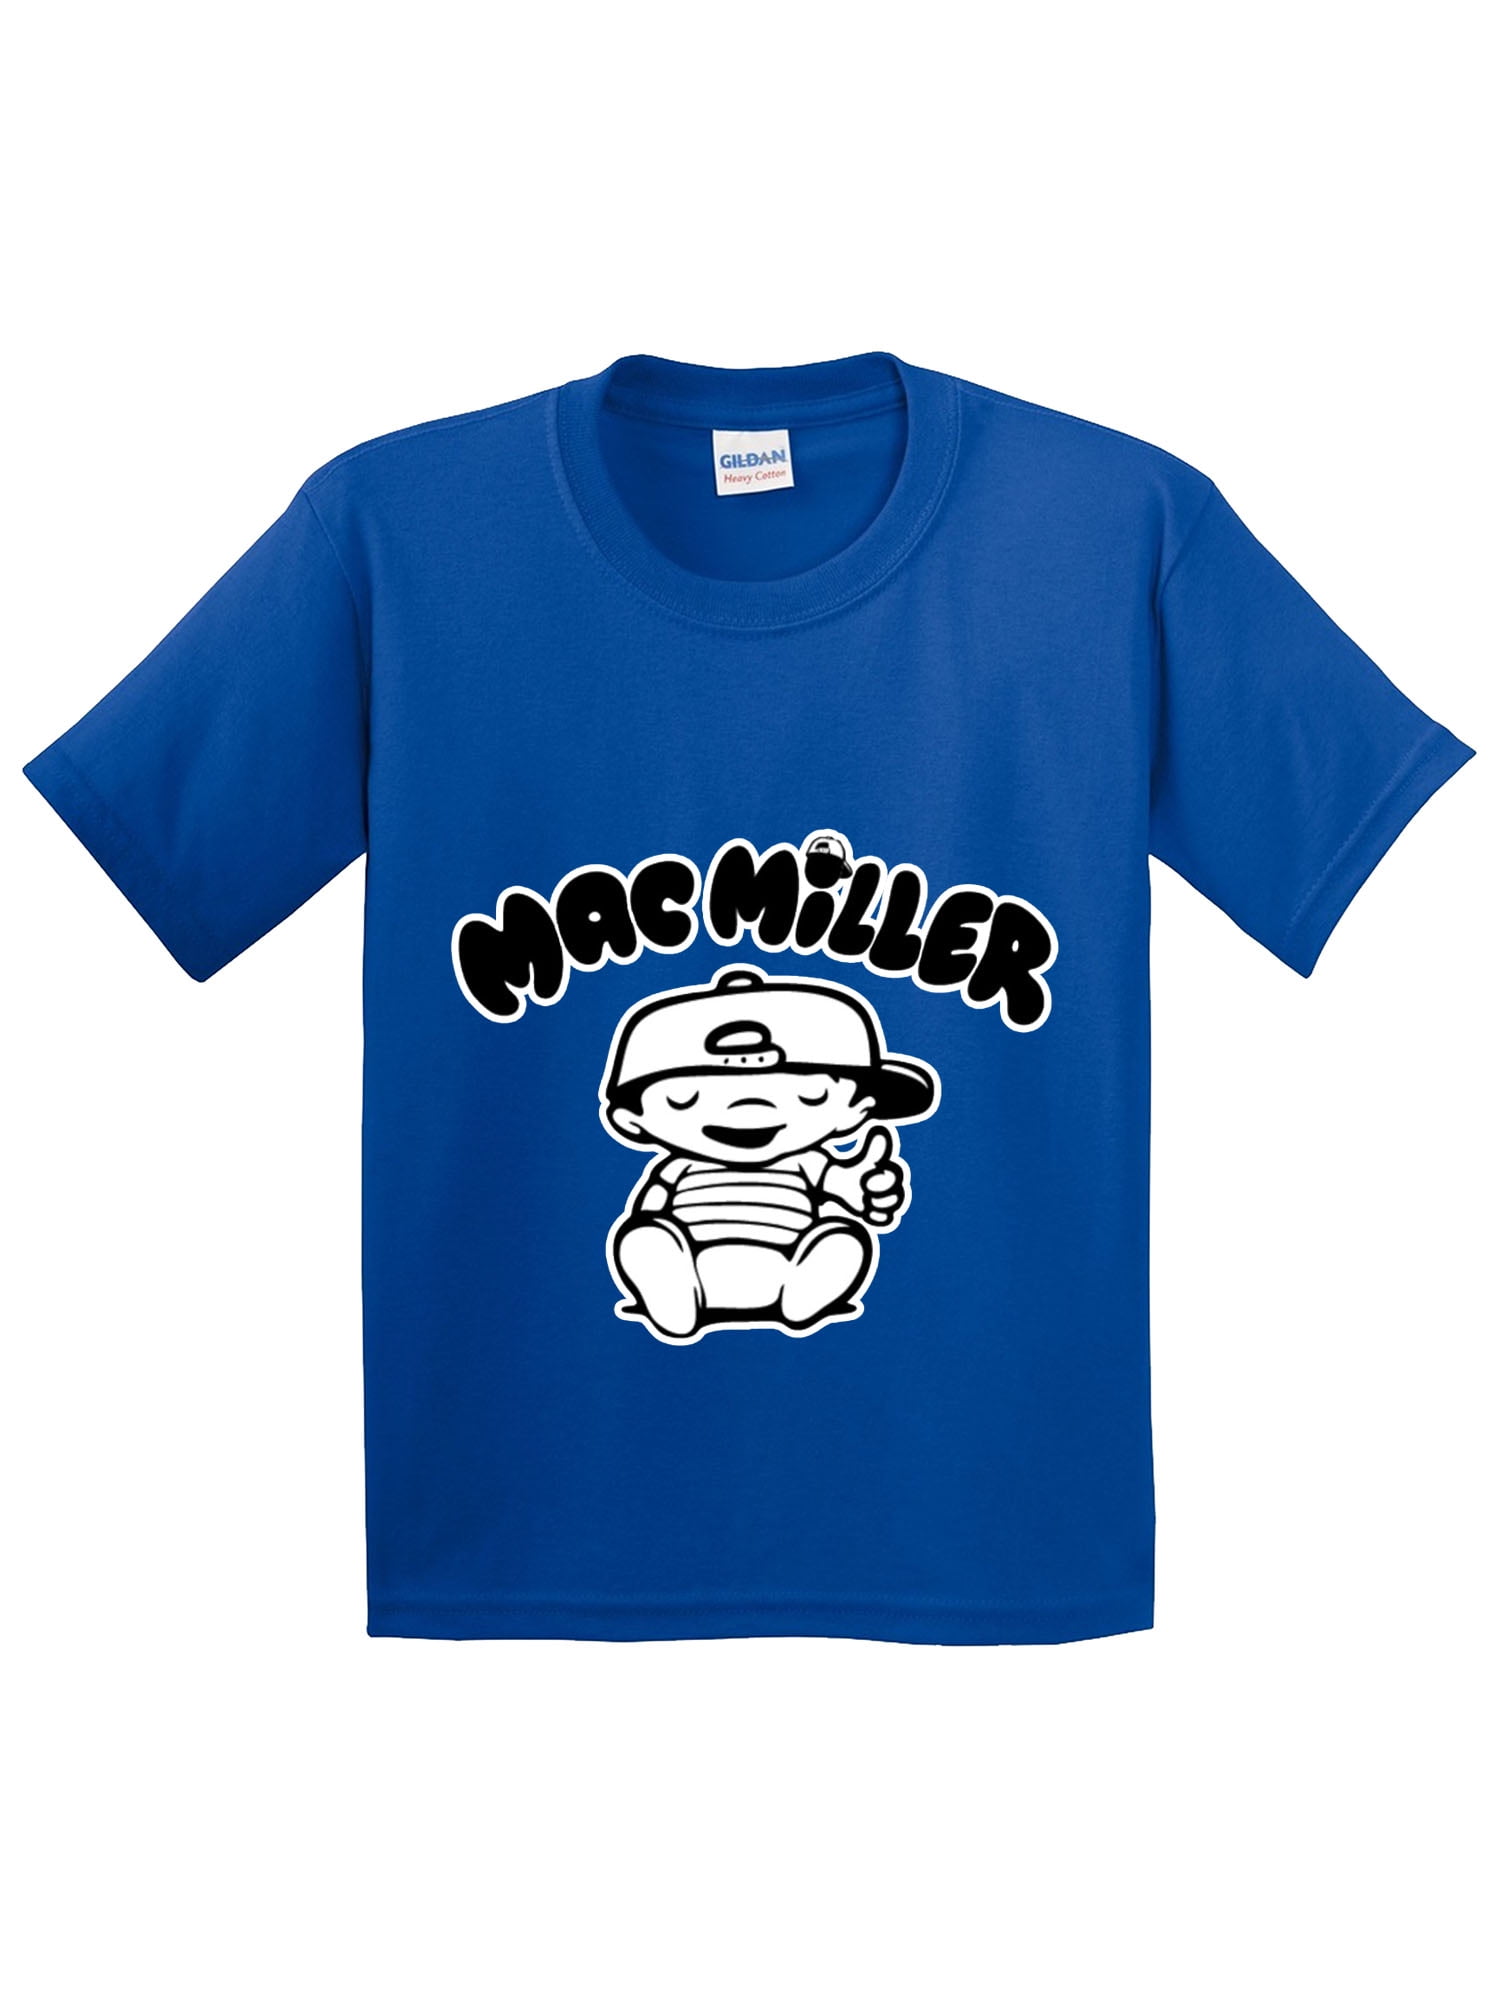 New Way 961 - Youth T-Shirt Mac Miller RIP Rapper Hip-Hop Medium Royal Blue - Walmart.com